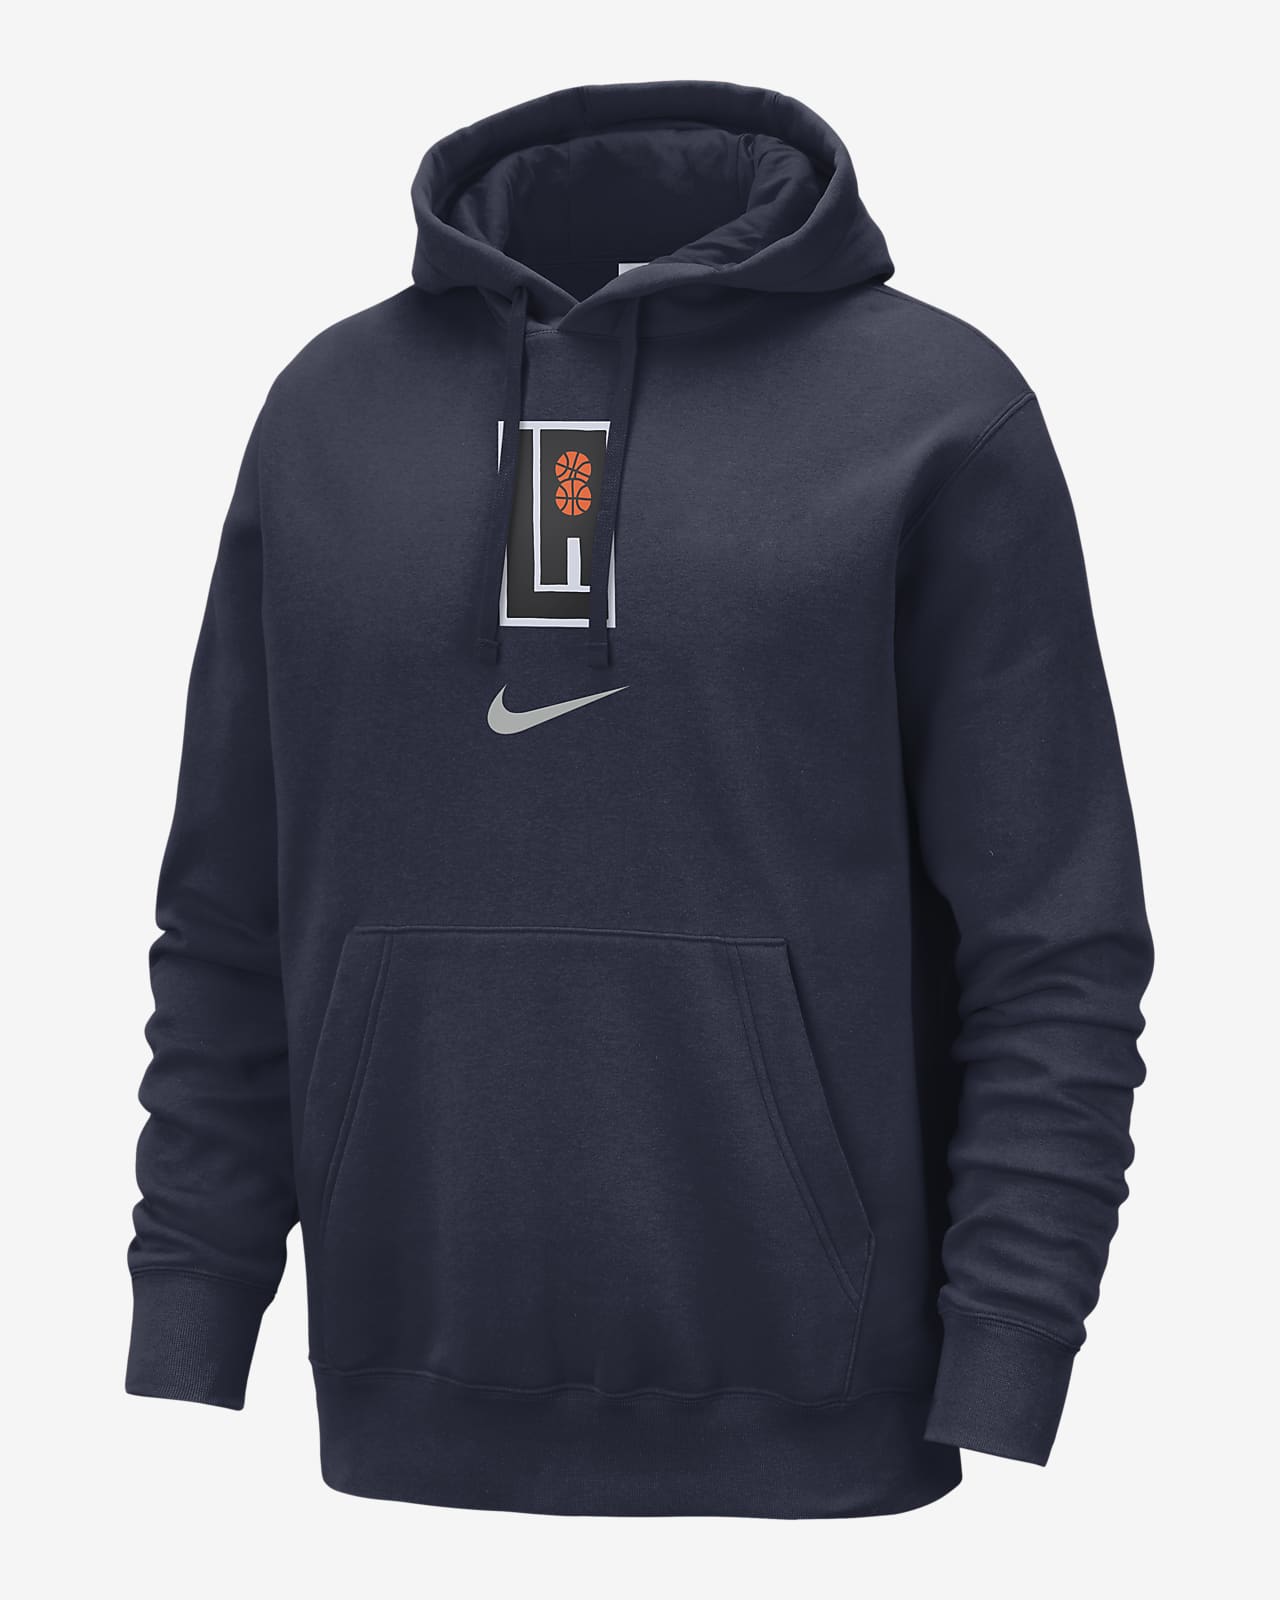 LA Clippers Club Fleece City Edition Nike NBA-Hoodie für Herren